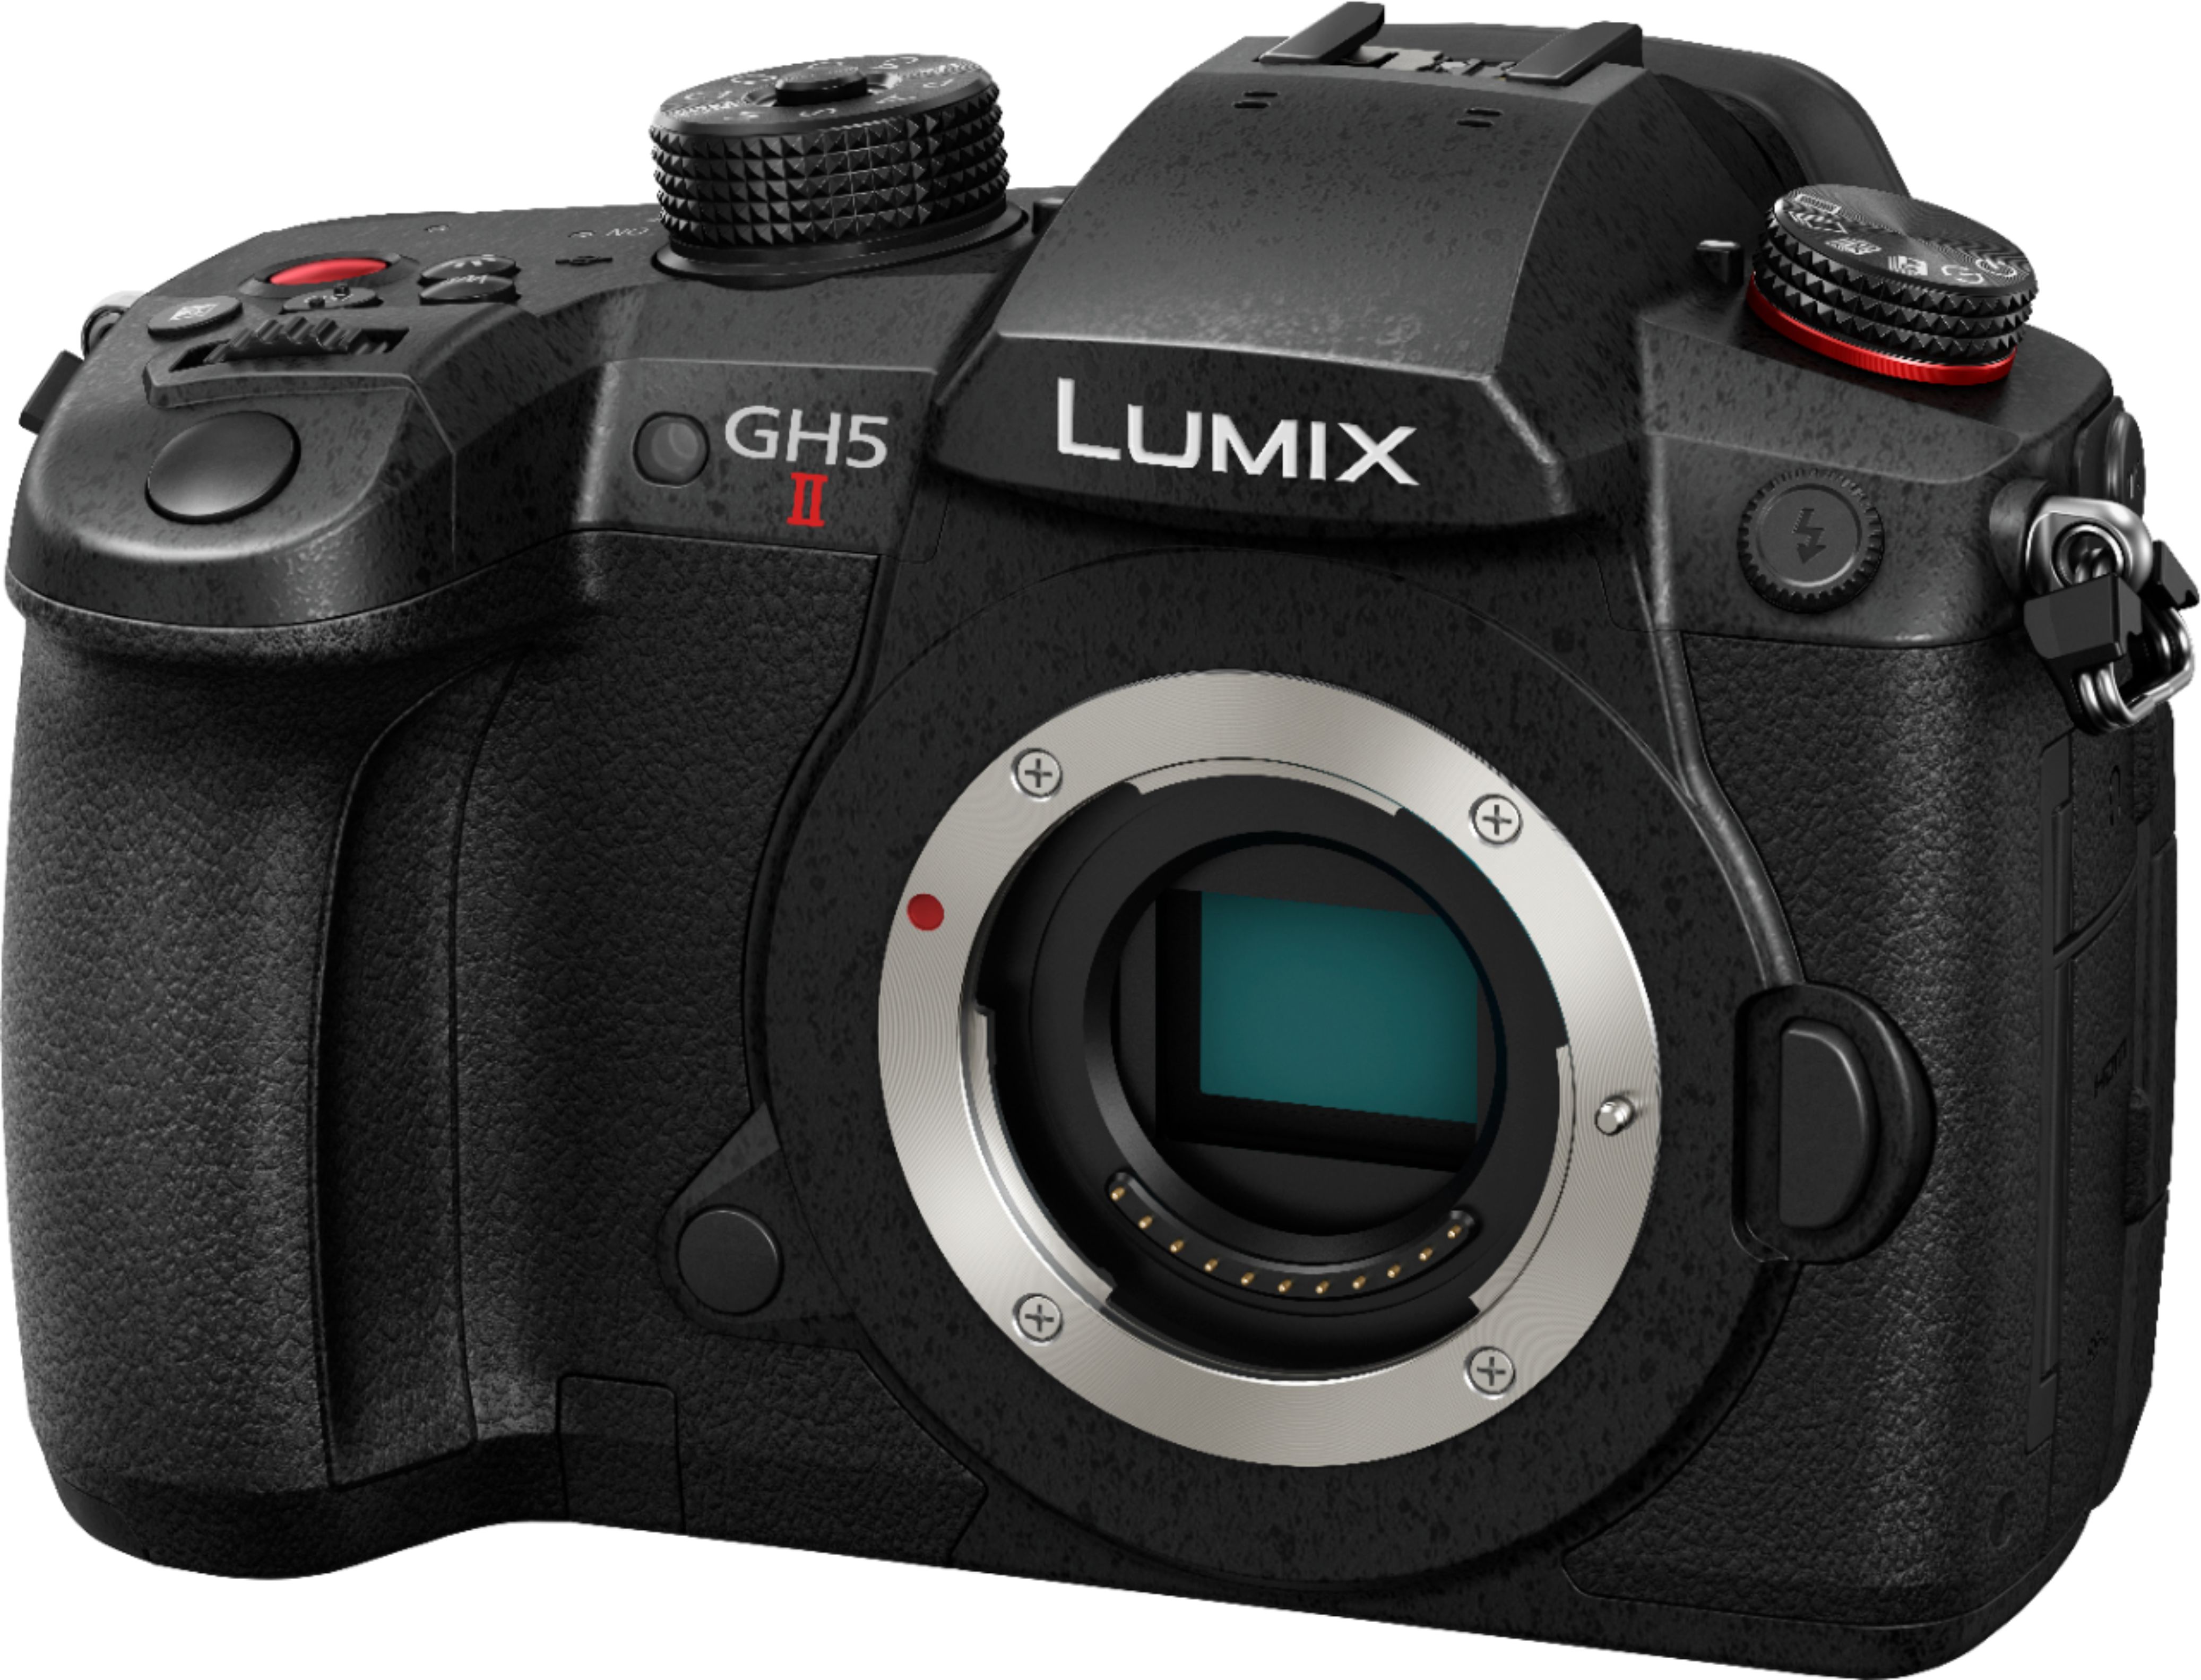 Angle View: Panasonic - LUMIX GH5M2 4K Video Mirrorless Camera (Body Only), DC-GH5M2BODY - Black